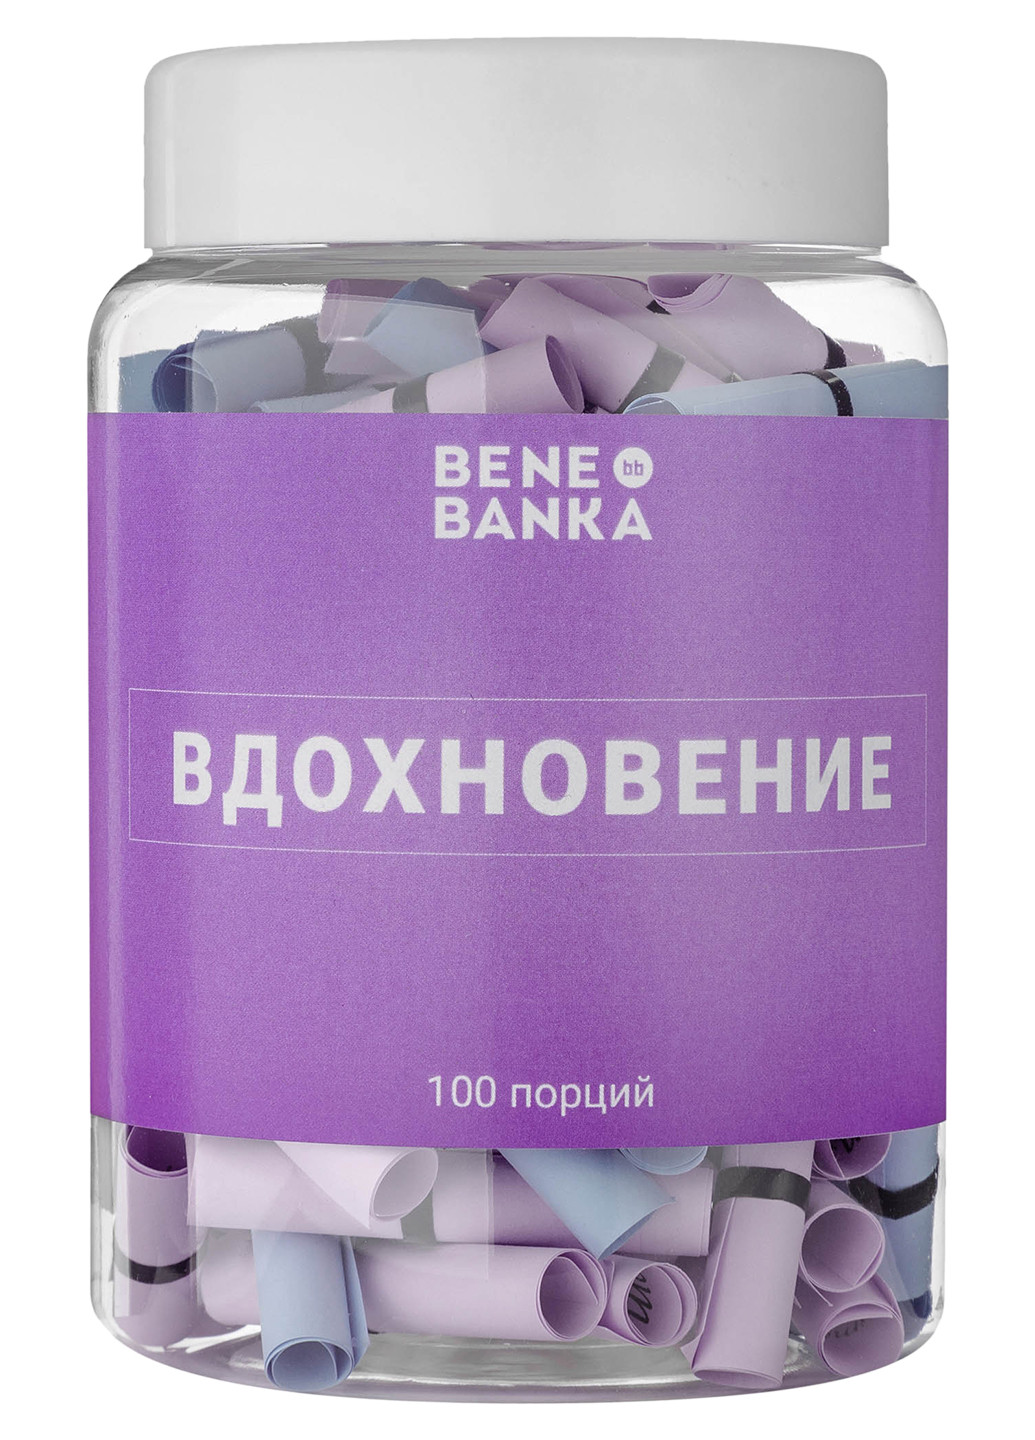 Баночка з записками "Вдохновение" російська мова Bene Banka (200653600)